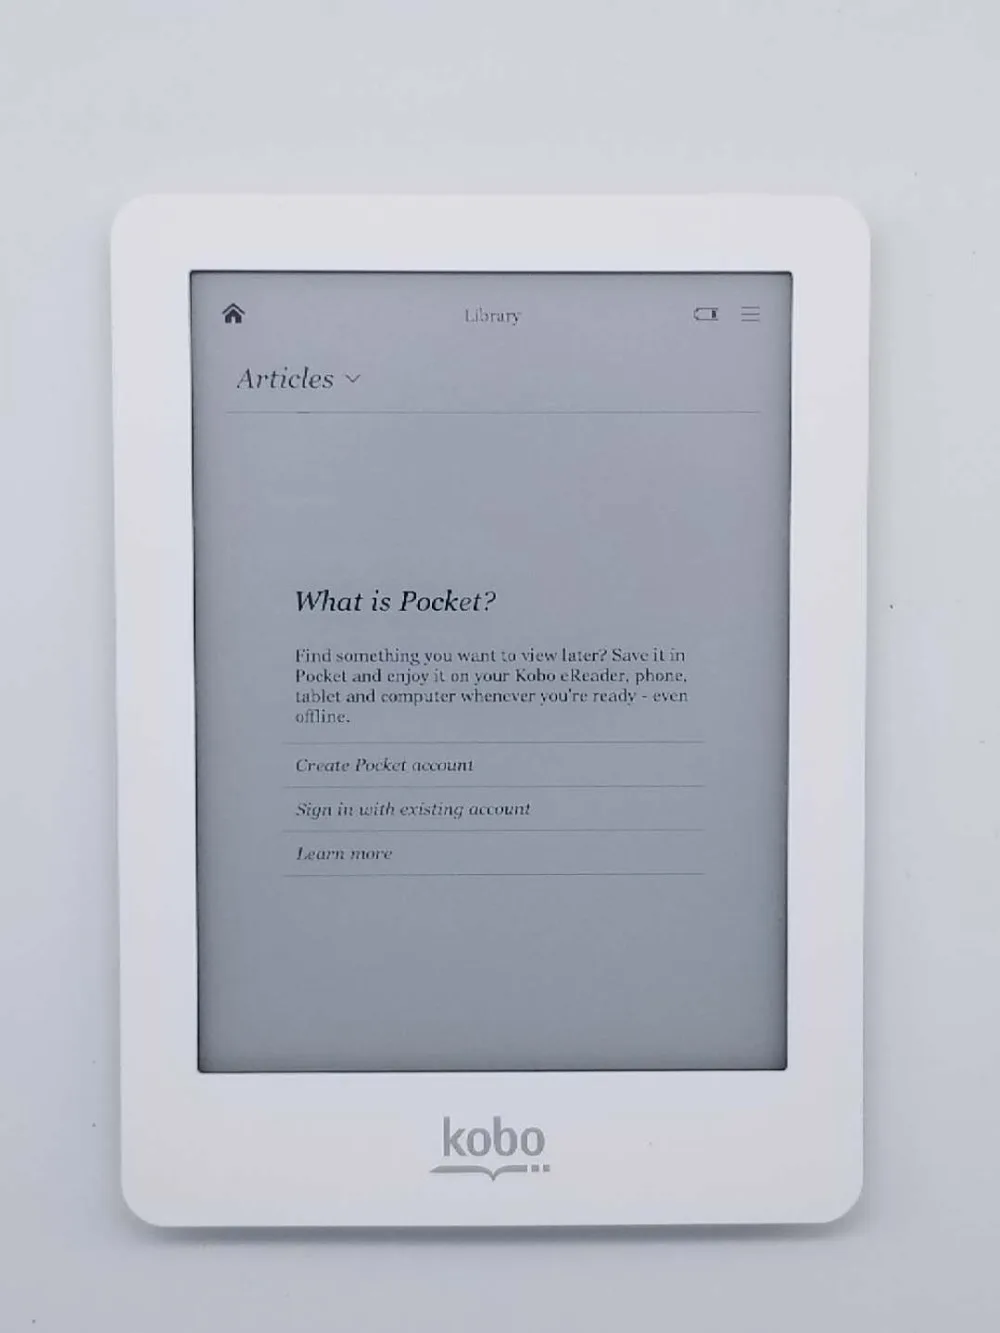 Электронная книга Kobo Glo N613 с сенсорным экраном e-ink 6 дюймов 1024x768 2 Гб wifi